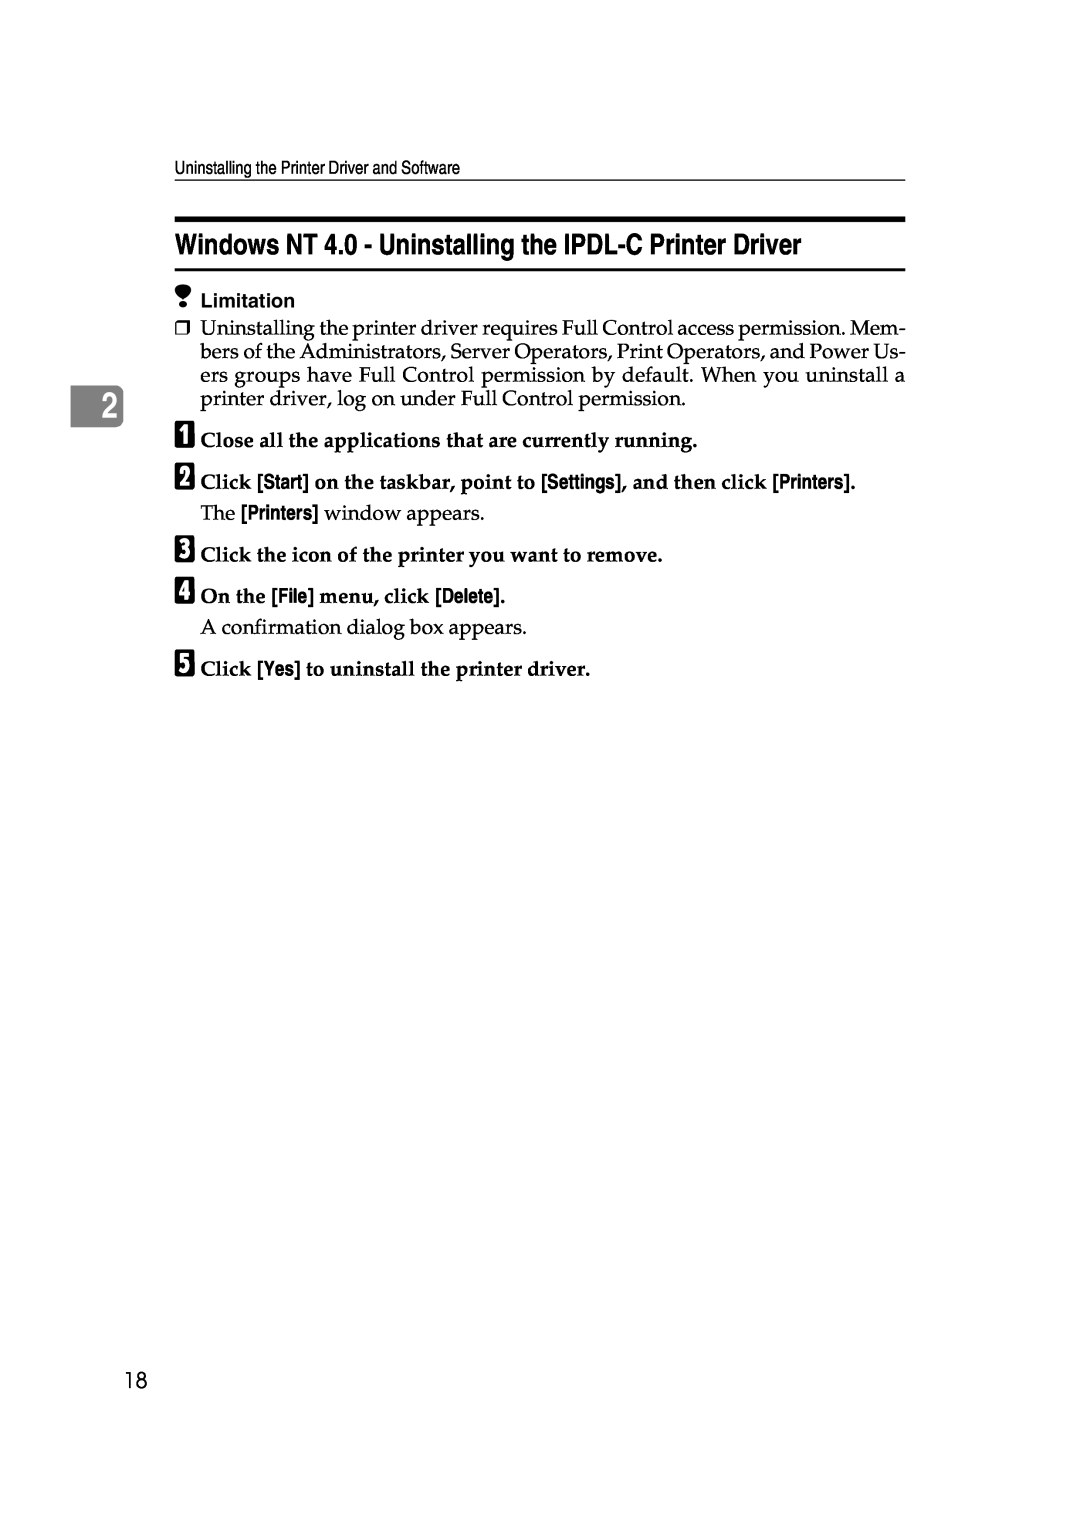 Lanier AP206 Windows NT 4.0 - Uninstalling the IPDL-C Printer Driver, printer driver, log on under Full Control permission 